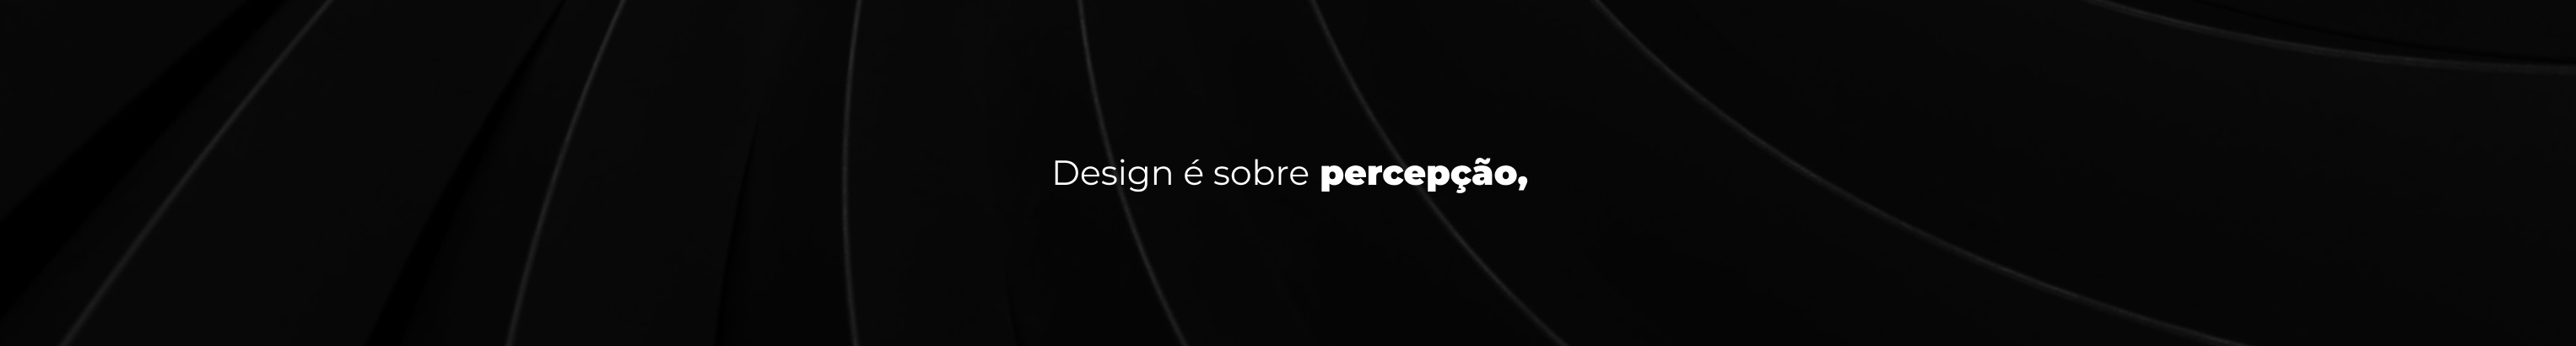 Letícia Piedade's profile banner